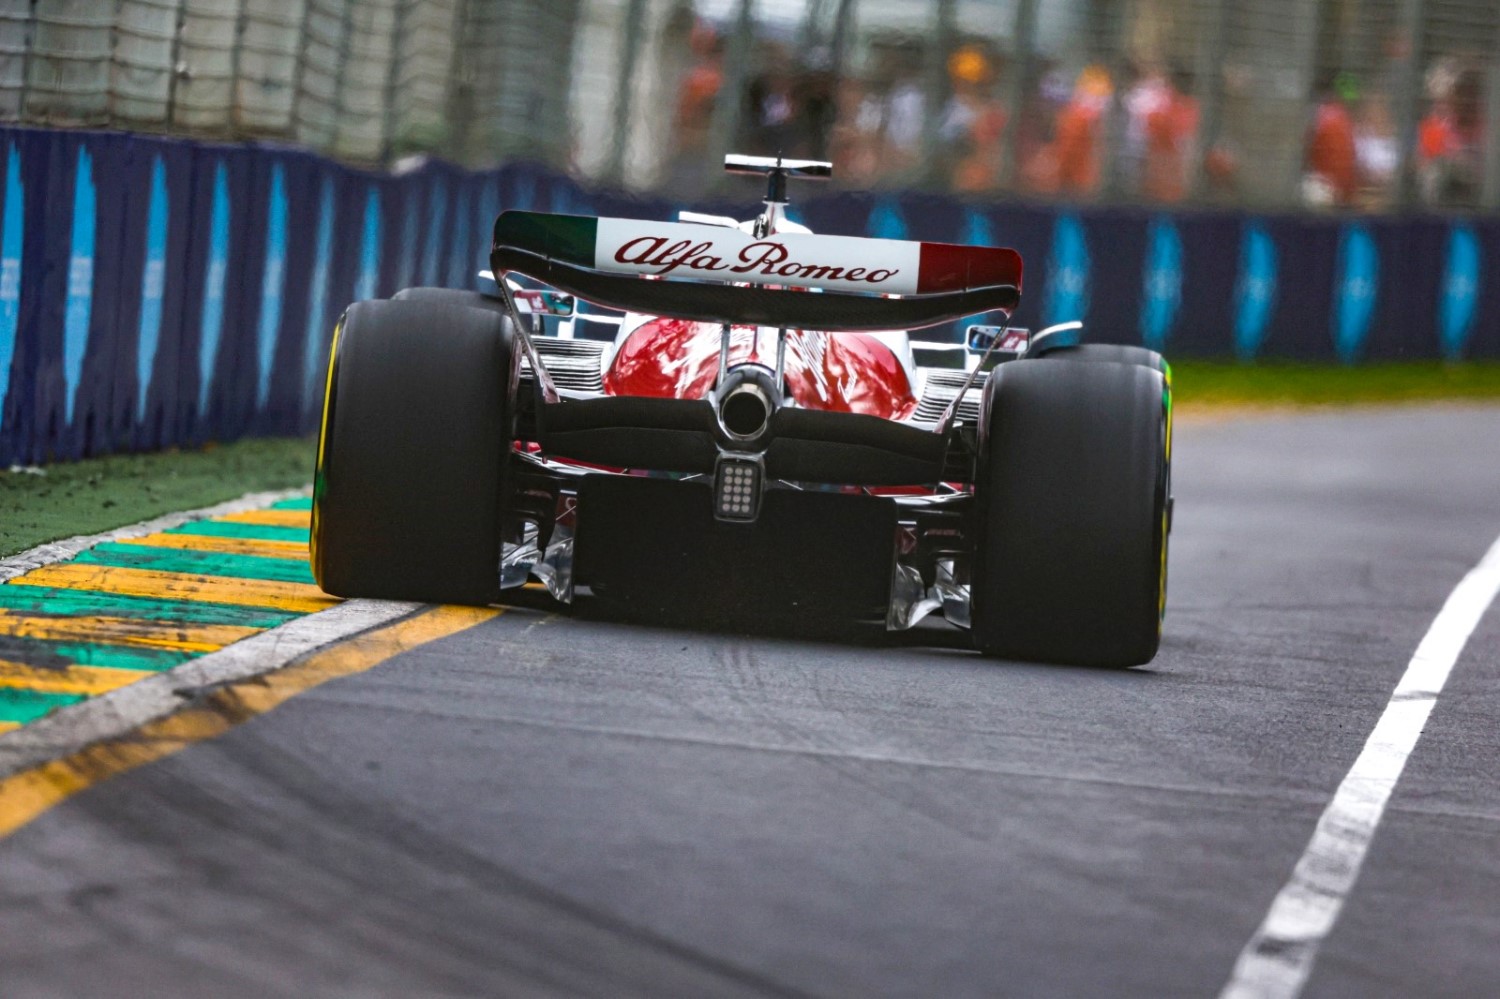 Ferrari, McLaren: cinco times de Fórmula 1 com equipes nos esports